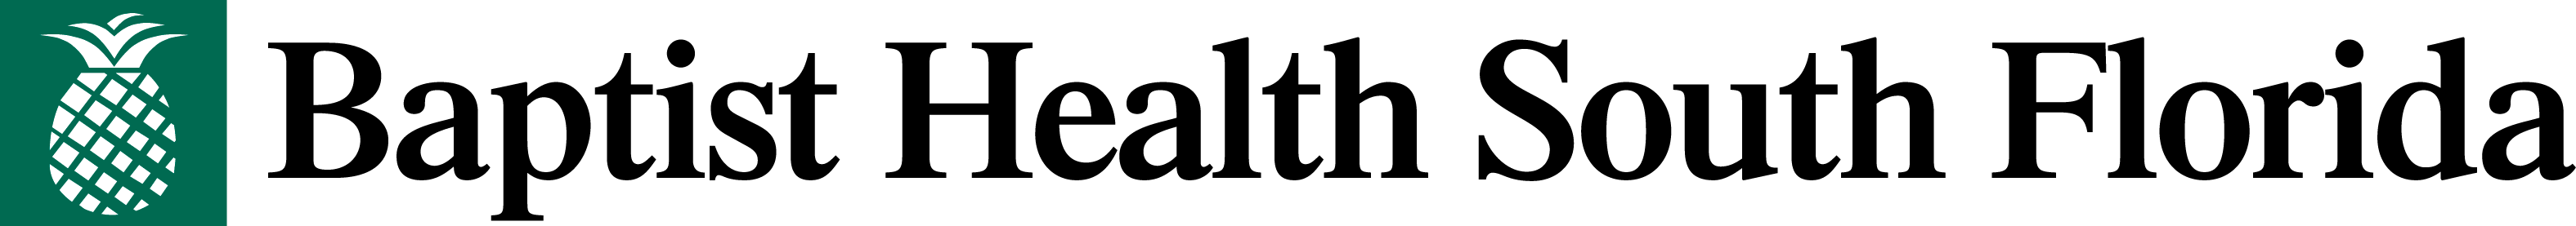 baptist-logo